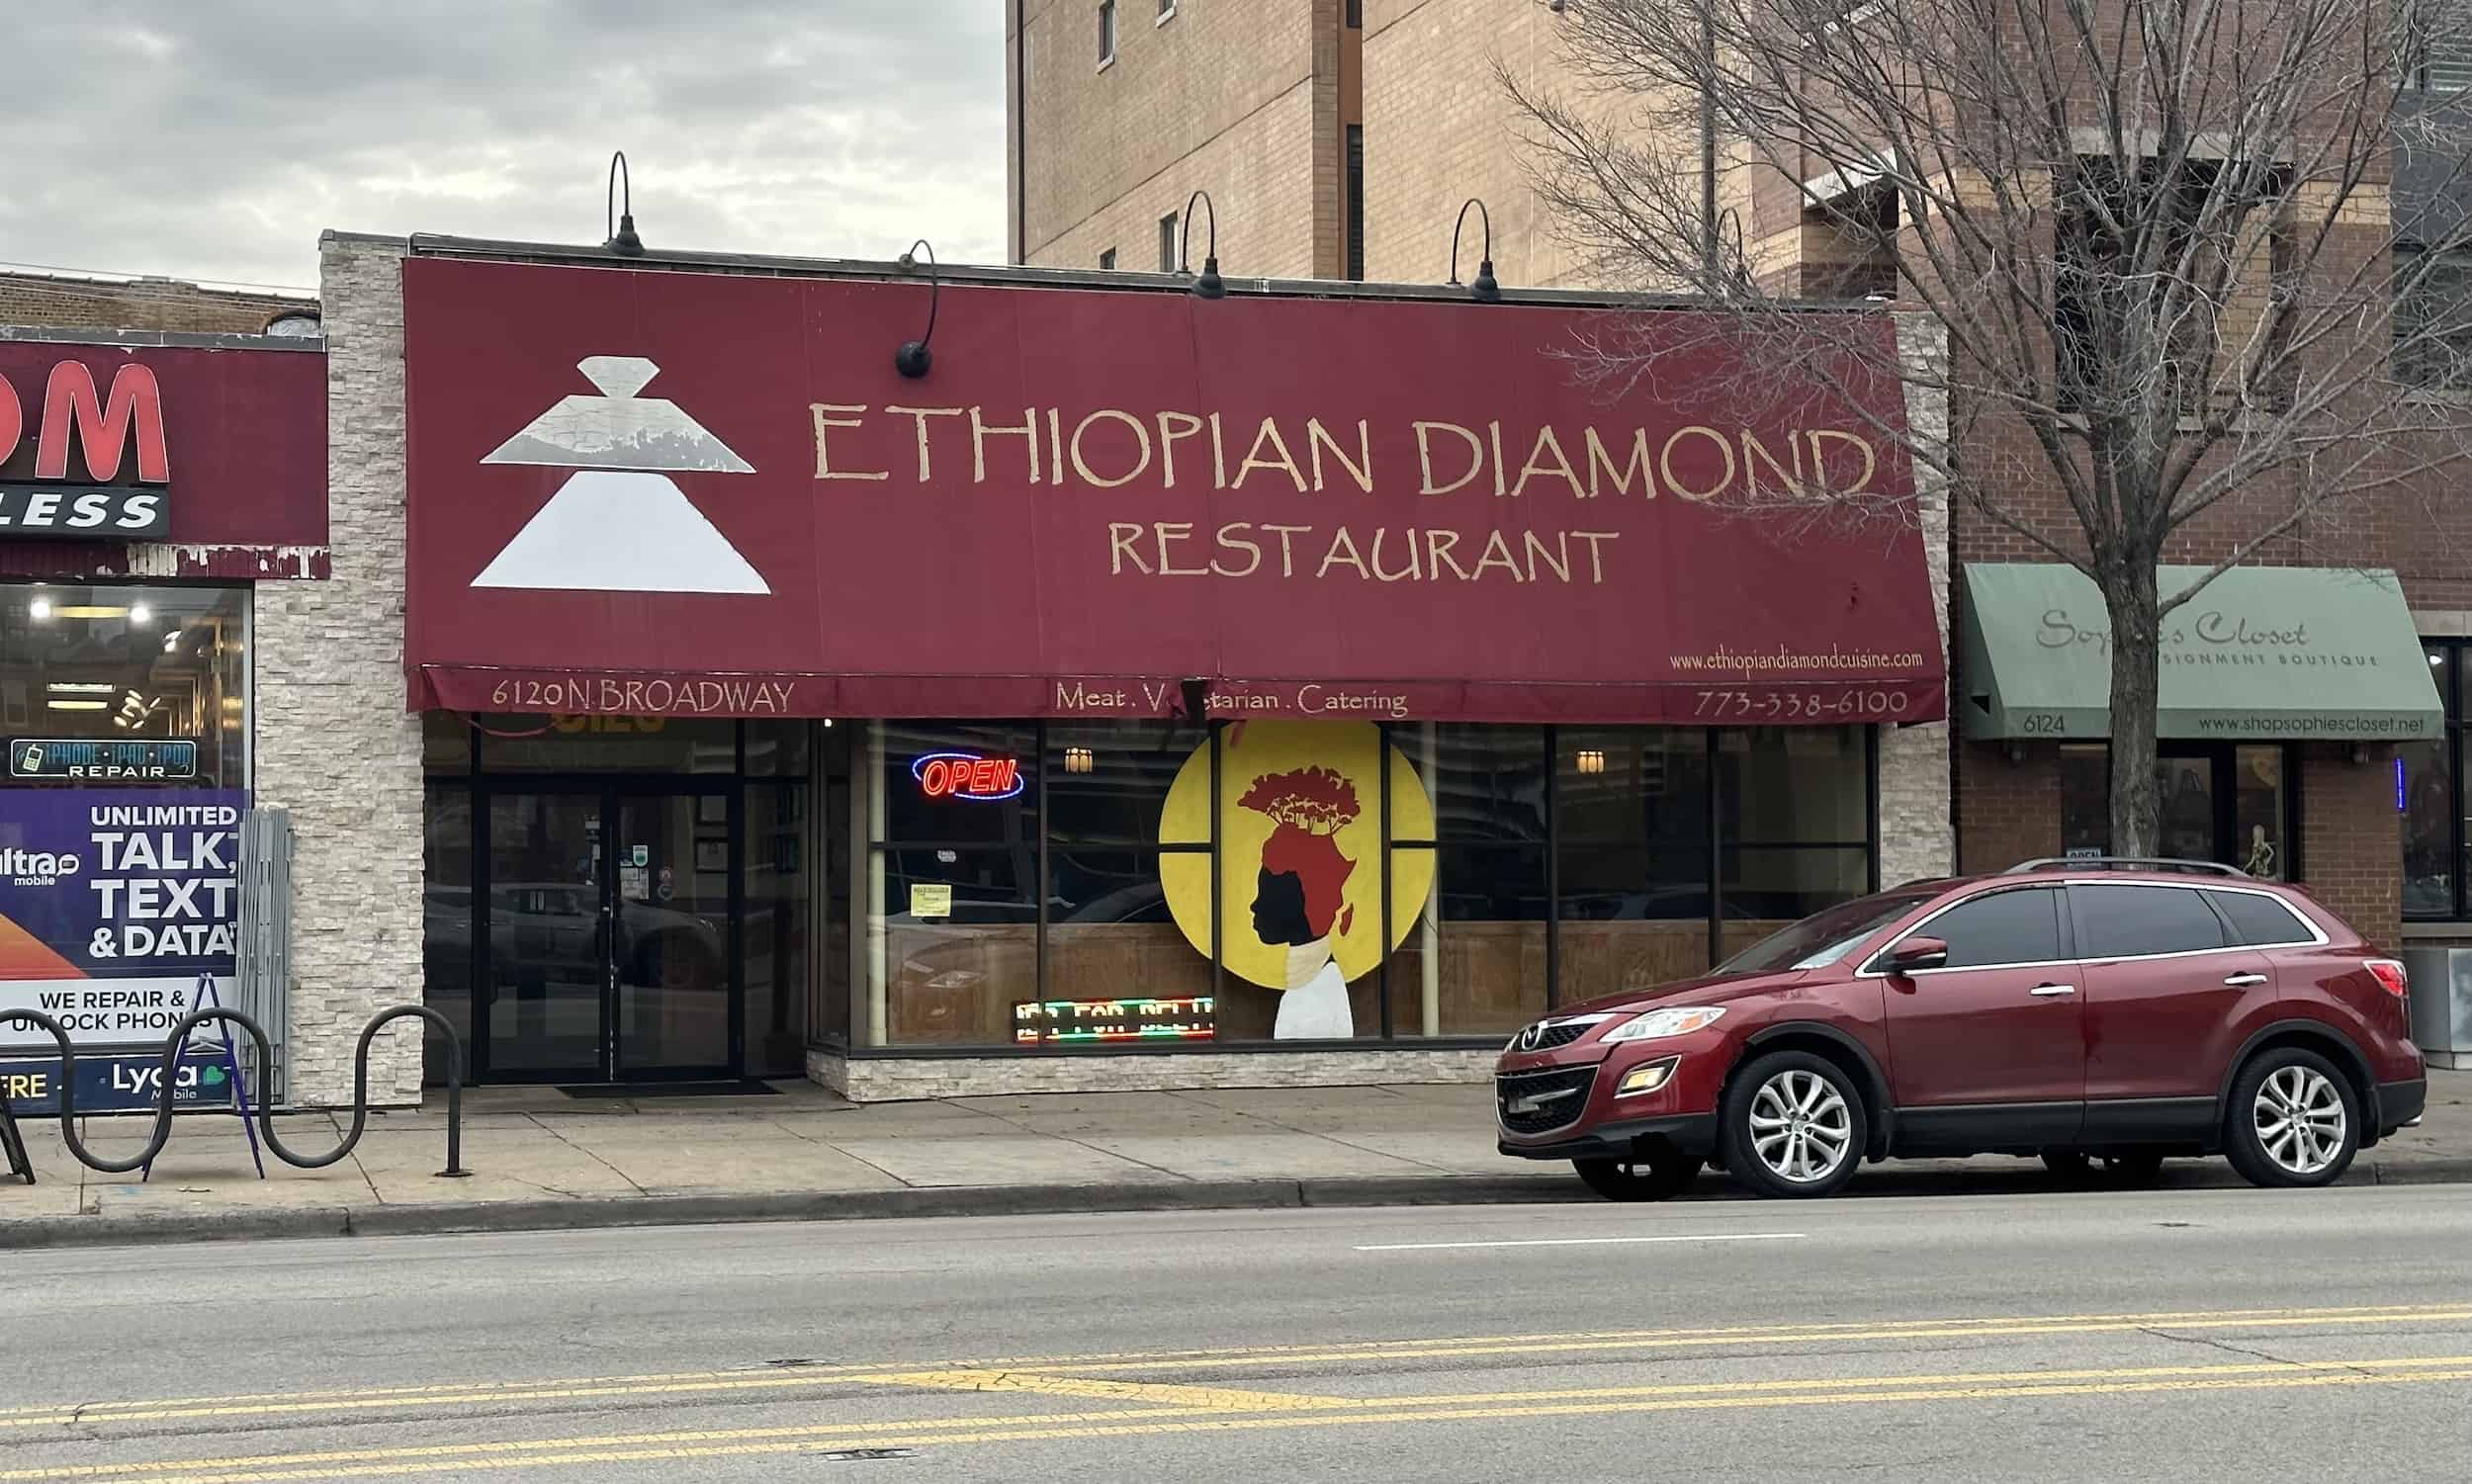 Ethiopian Diamond in Edgewater, Chicago, Illinois